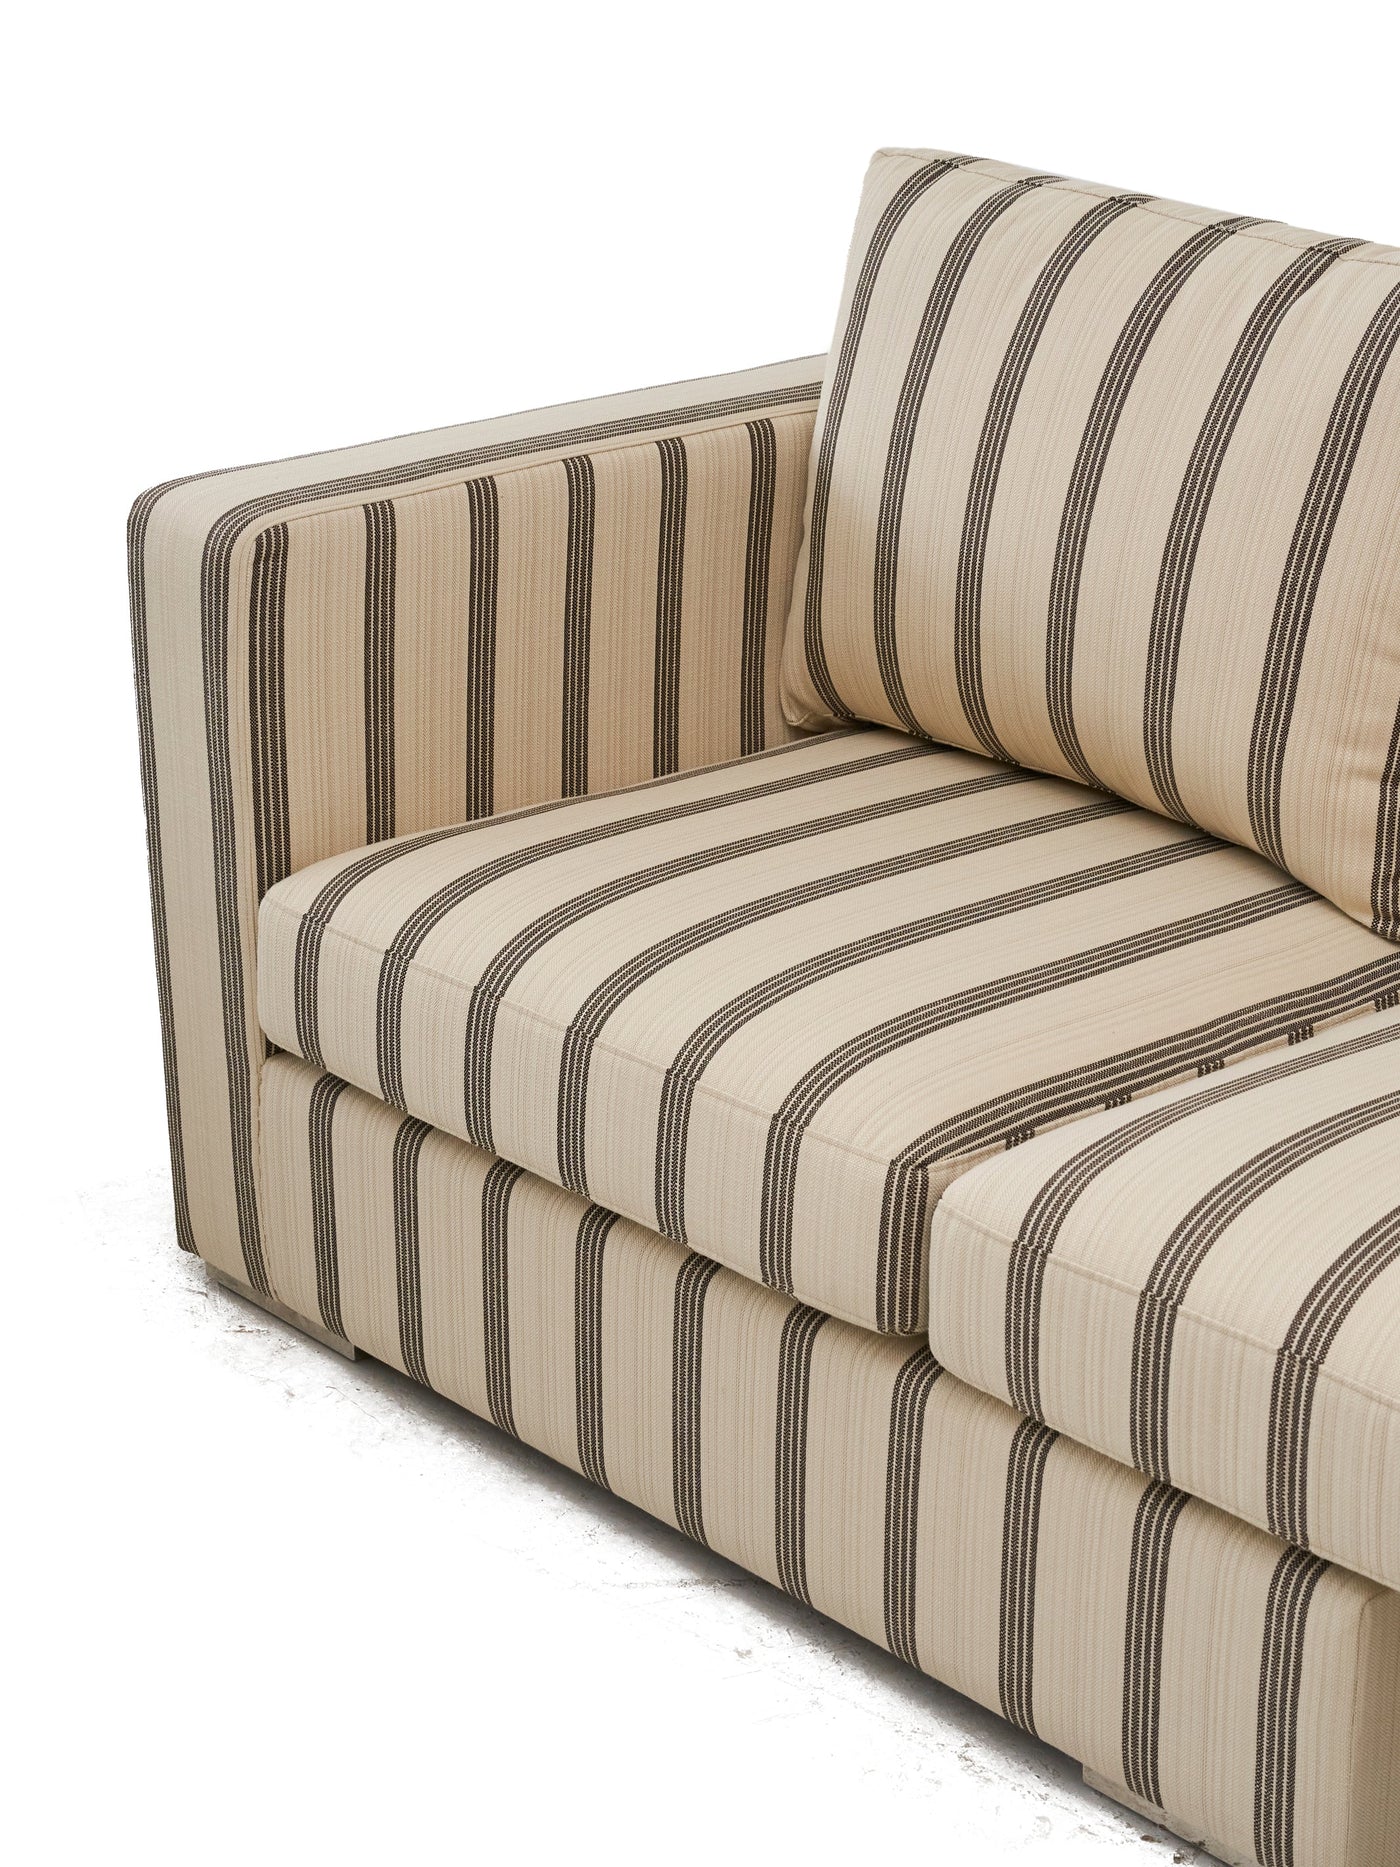 Three-Seater Sofa in Brown Stripe